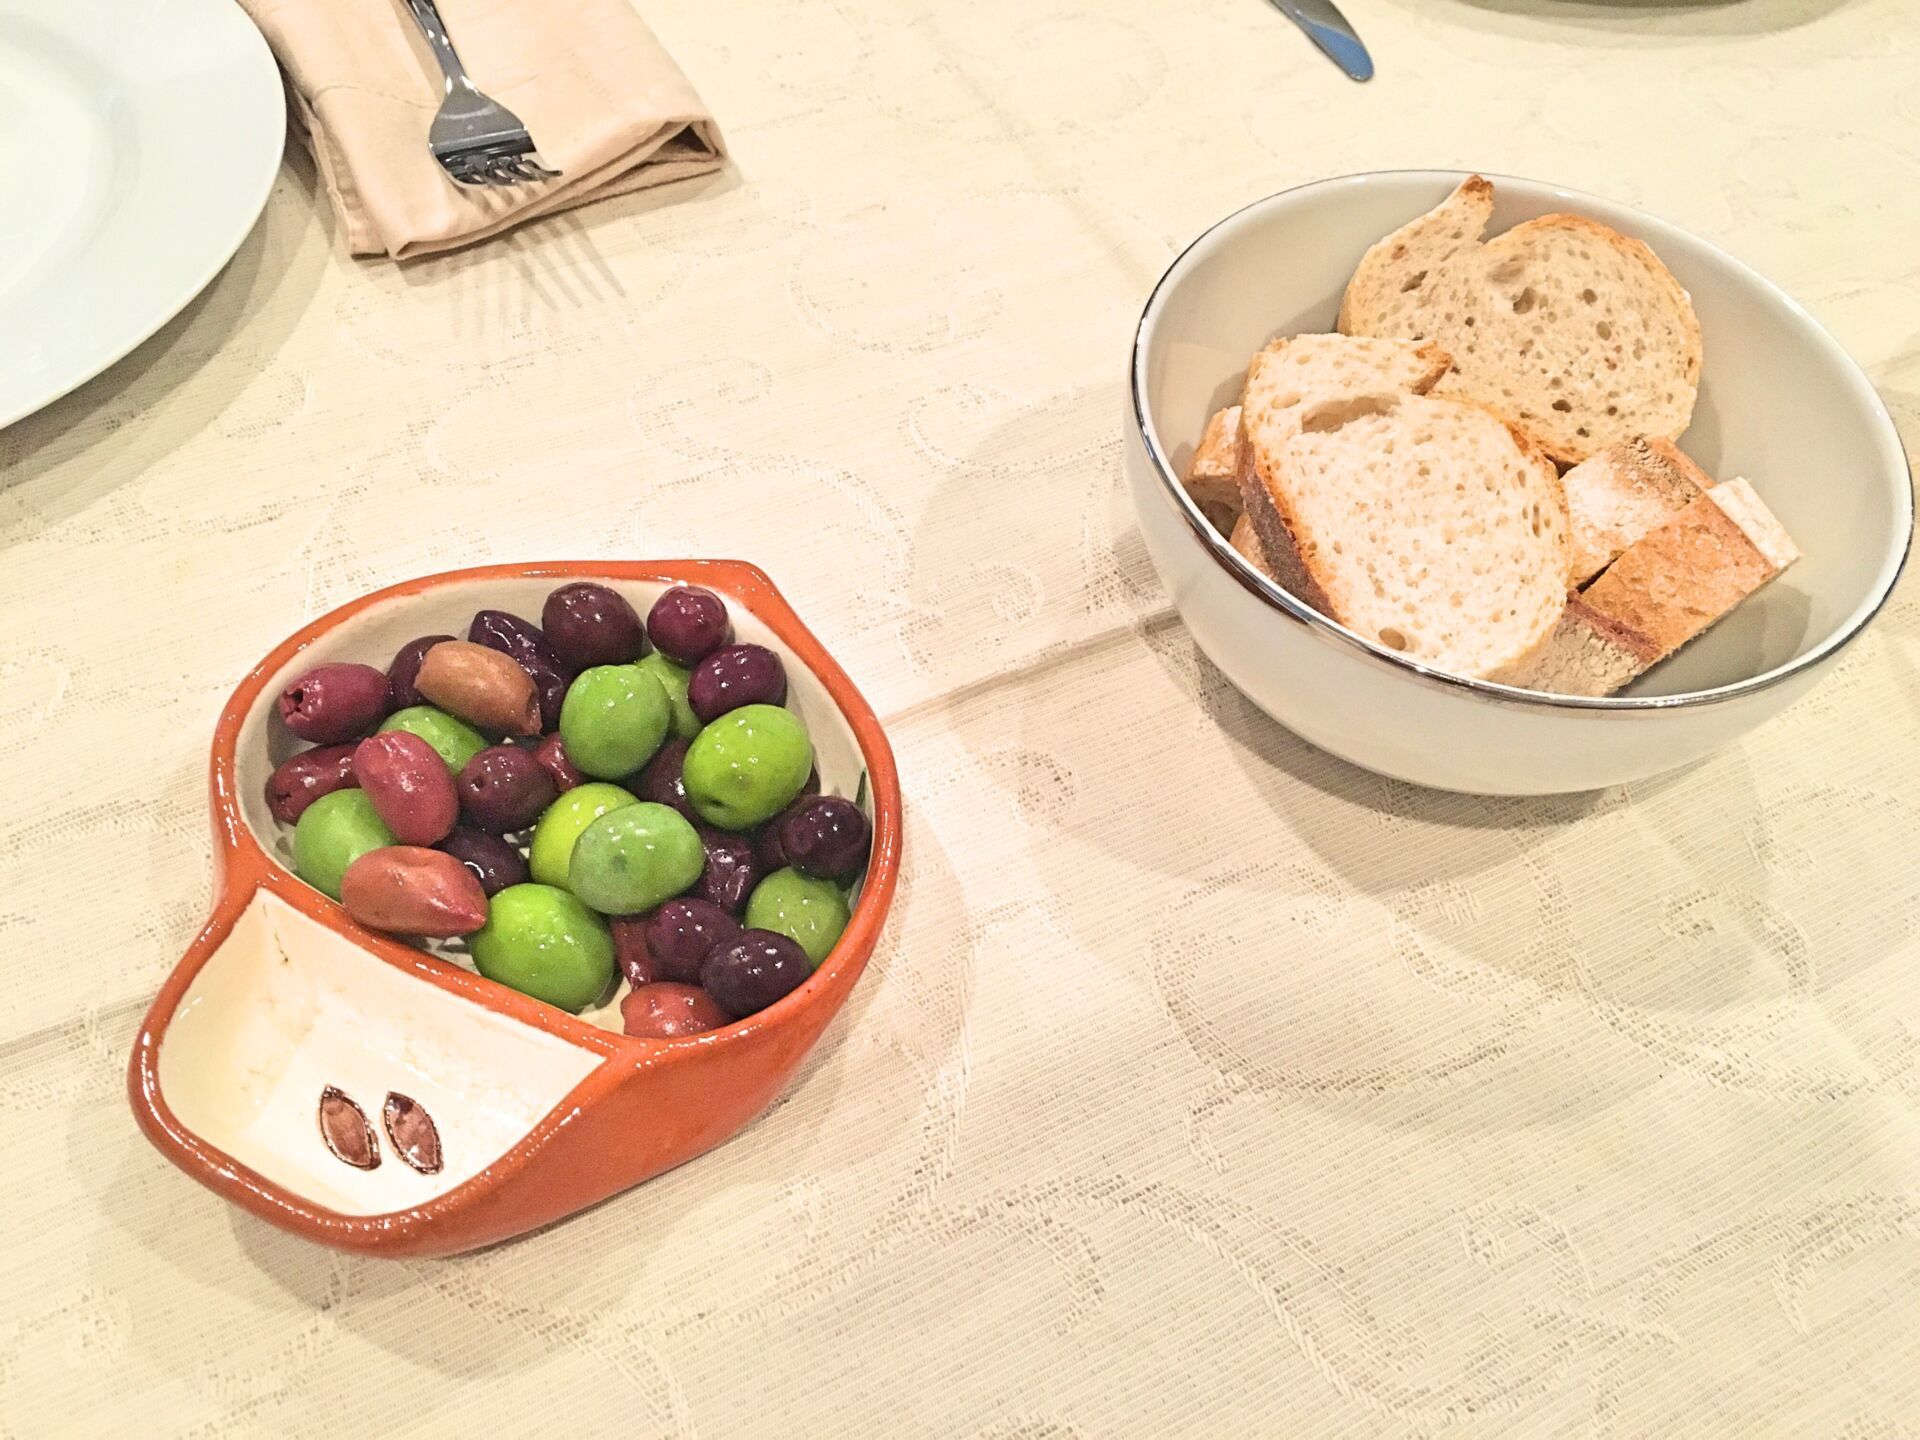 Bread & olives